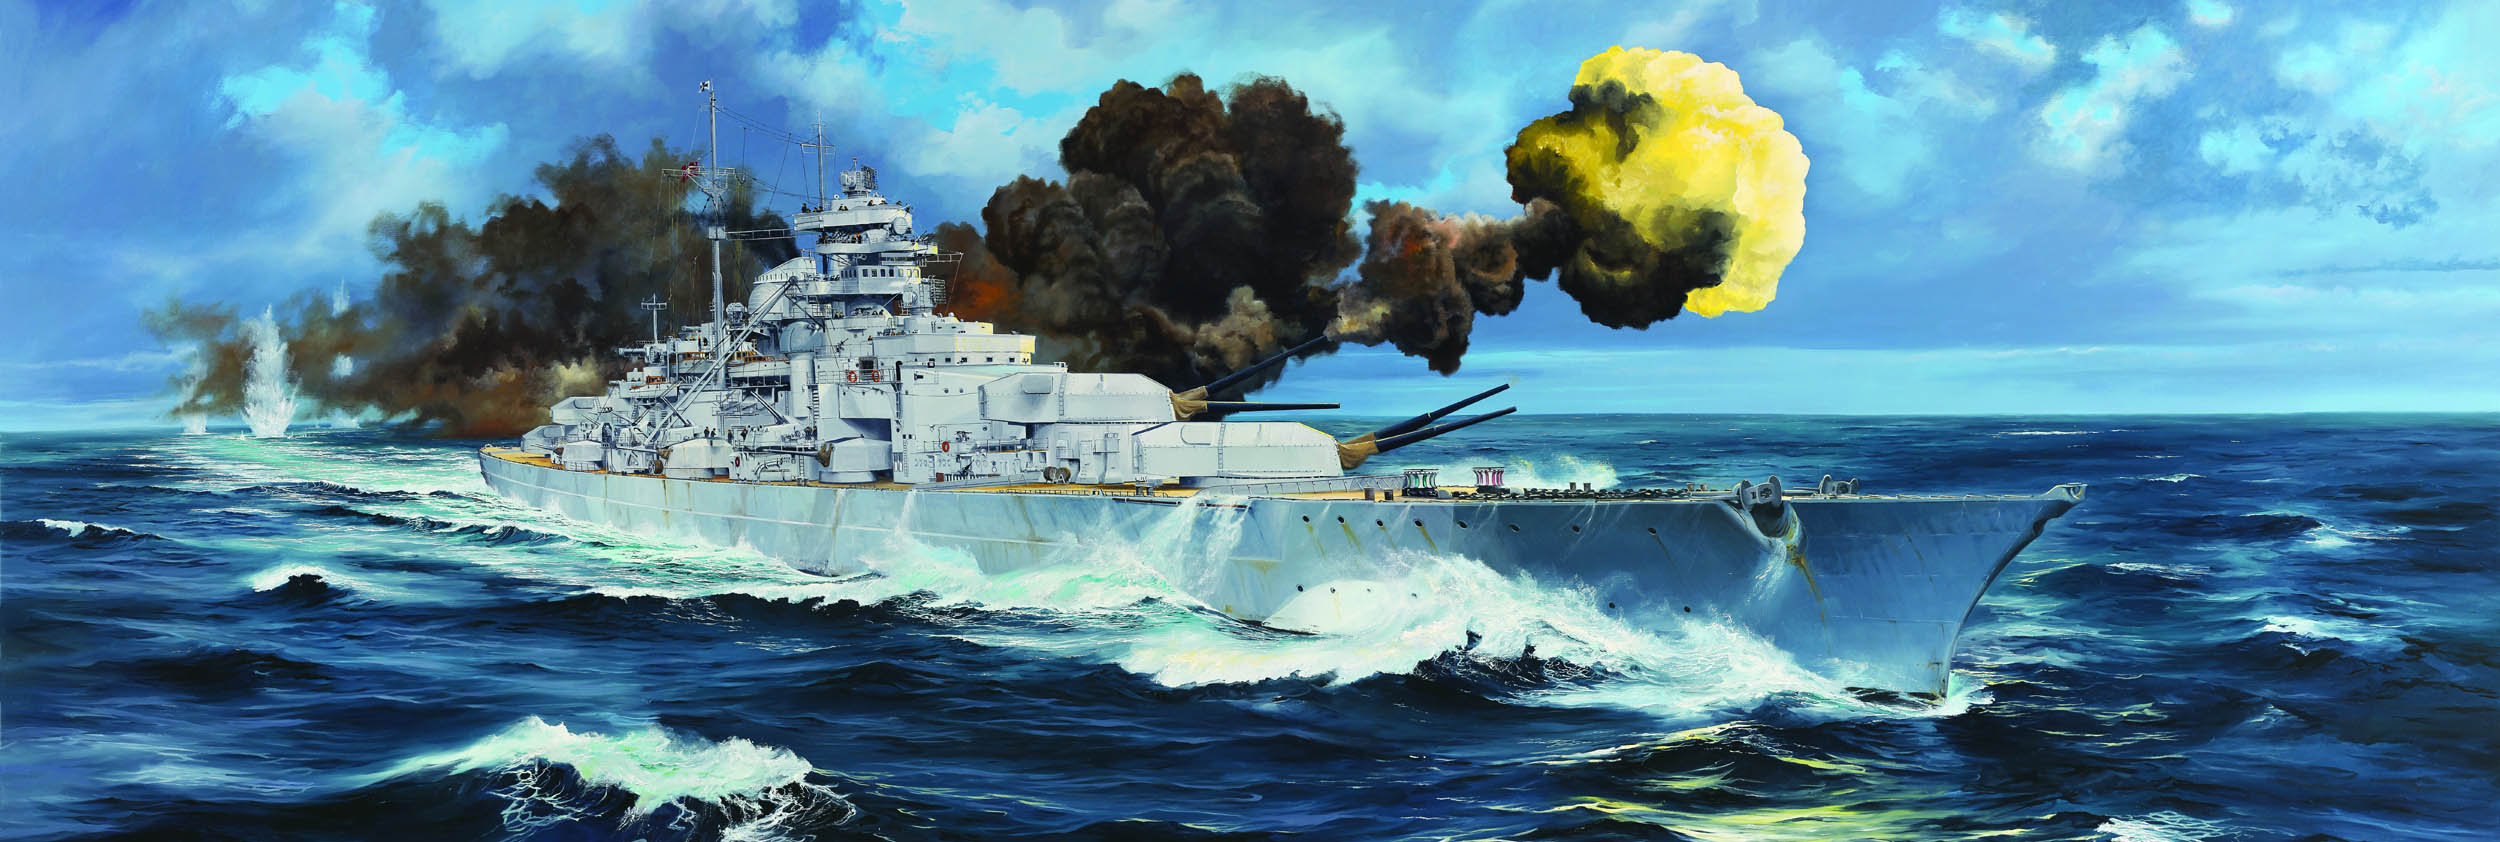 03702  флот  German Bismarck Battleship  (1:200)